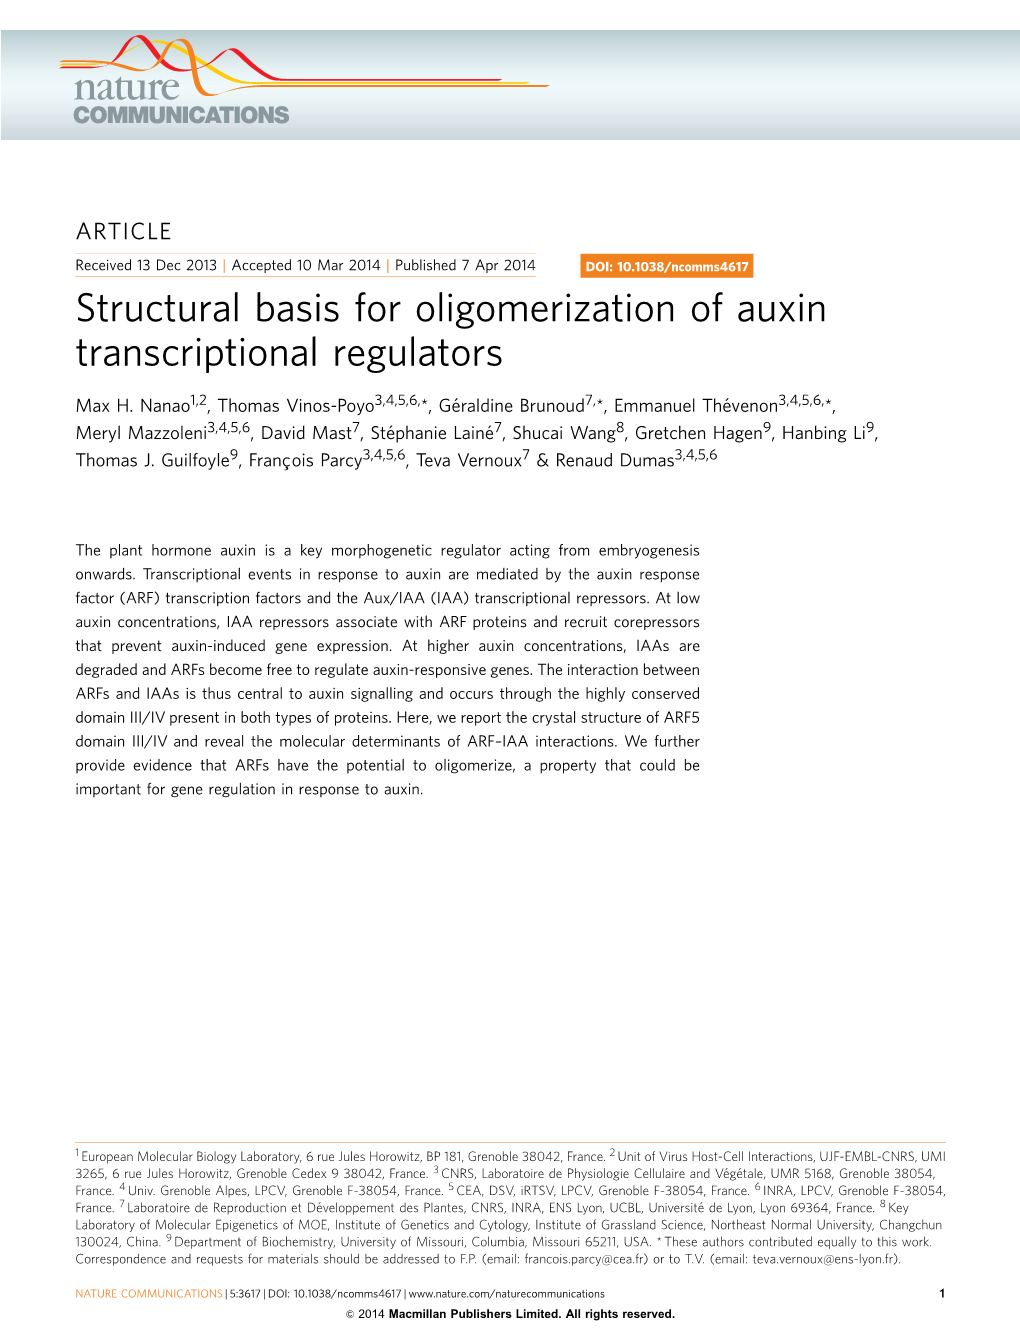 Structural Basis for Oligomerization of Auxin Transcriptional Regulators